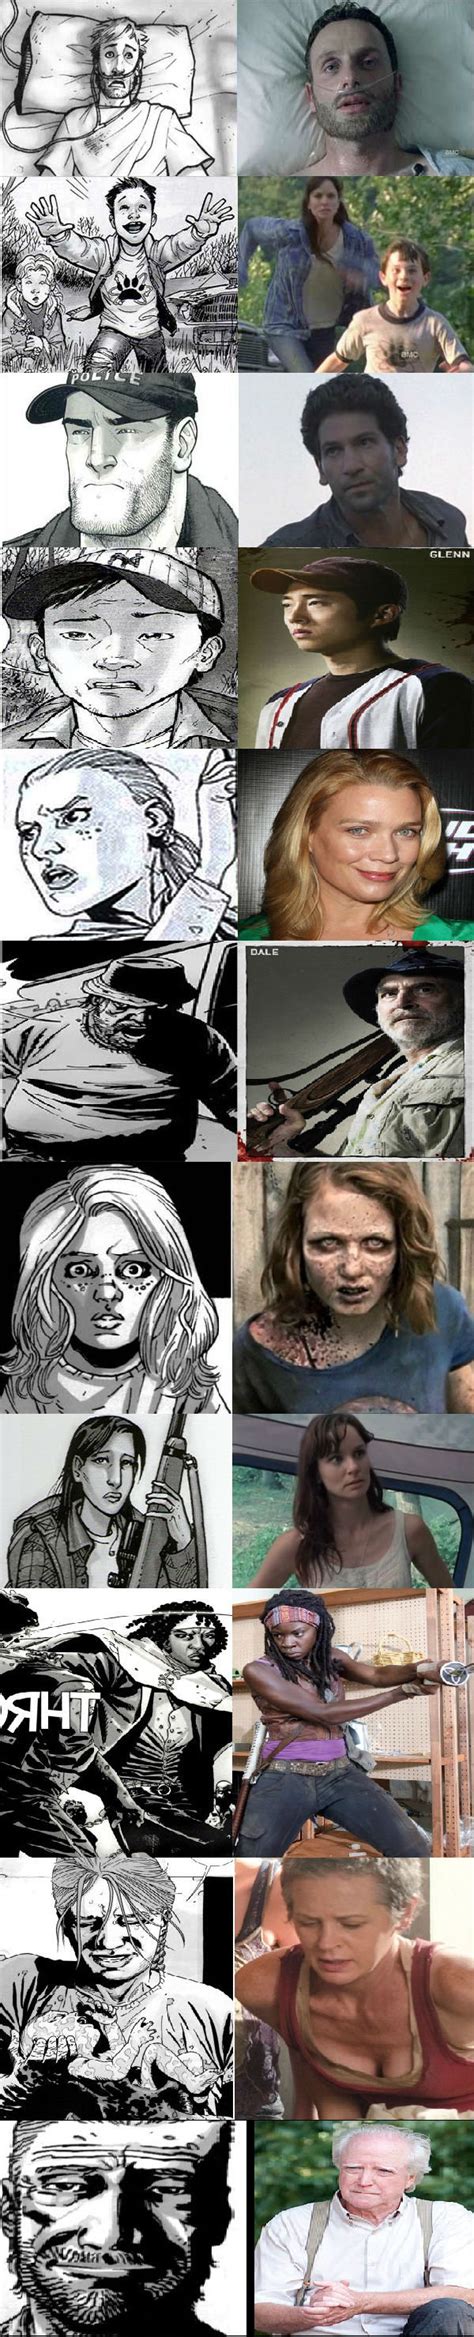 Walking Dead Character Comparisons Tv Show Vs Comic Books Imgur